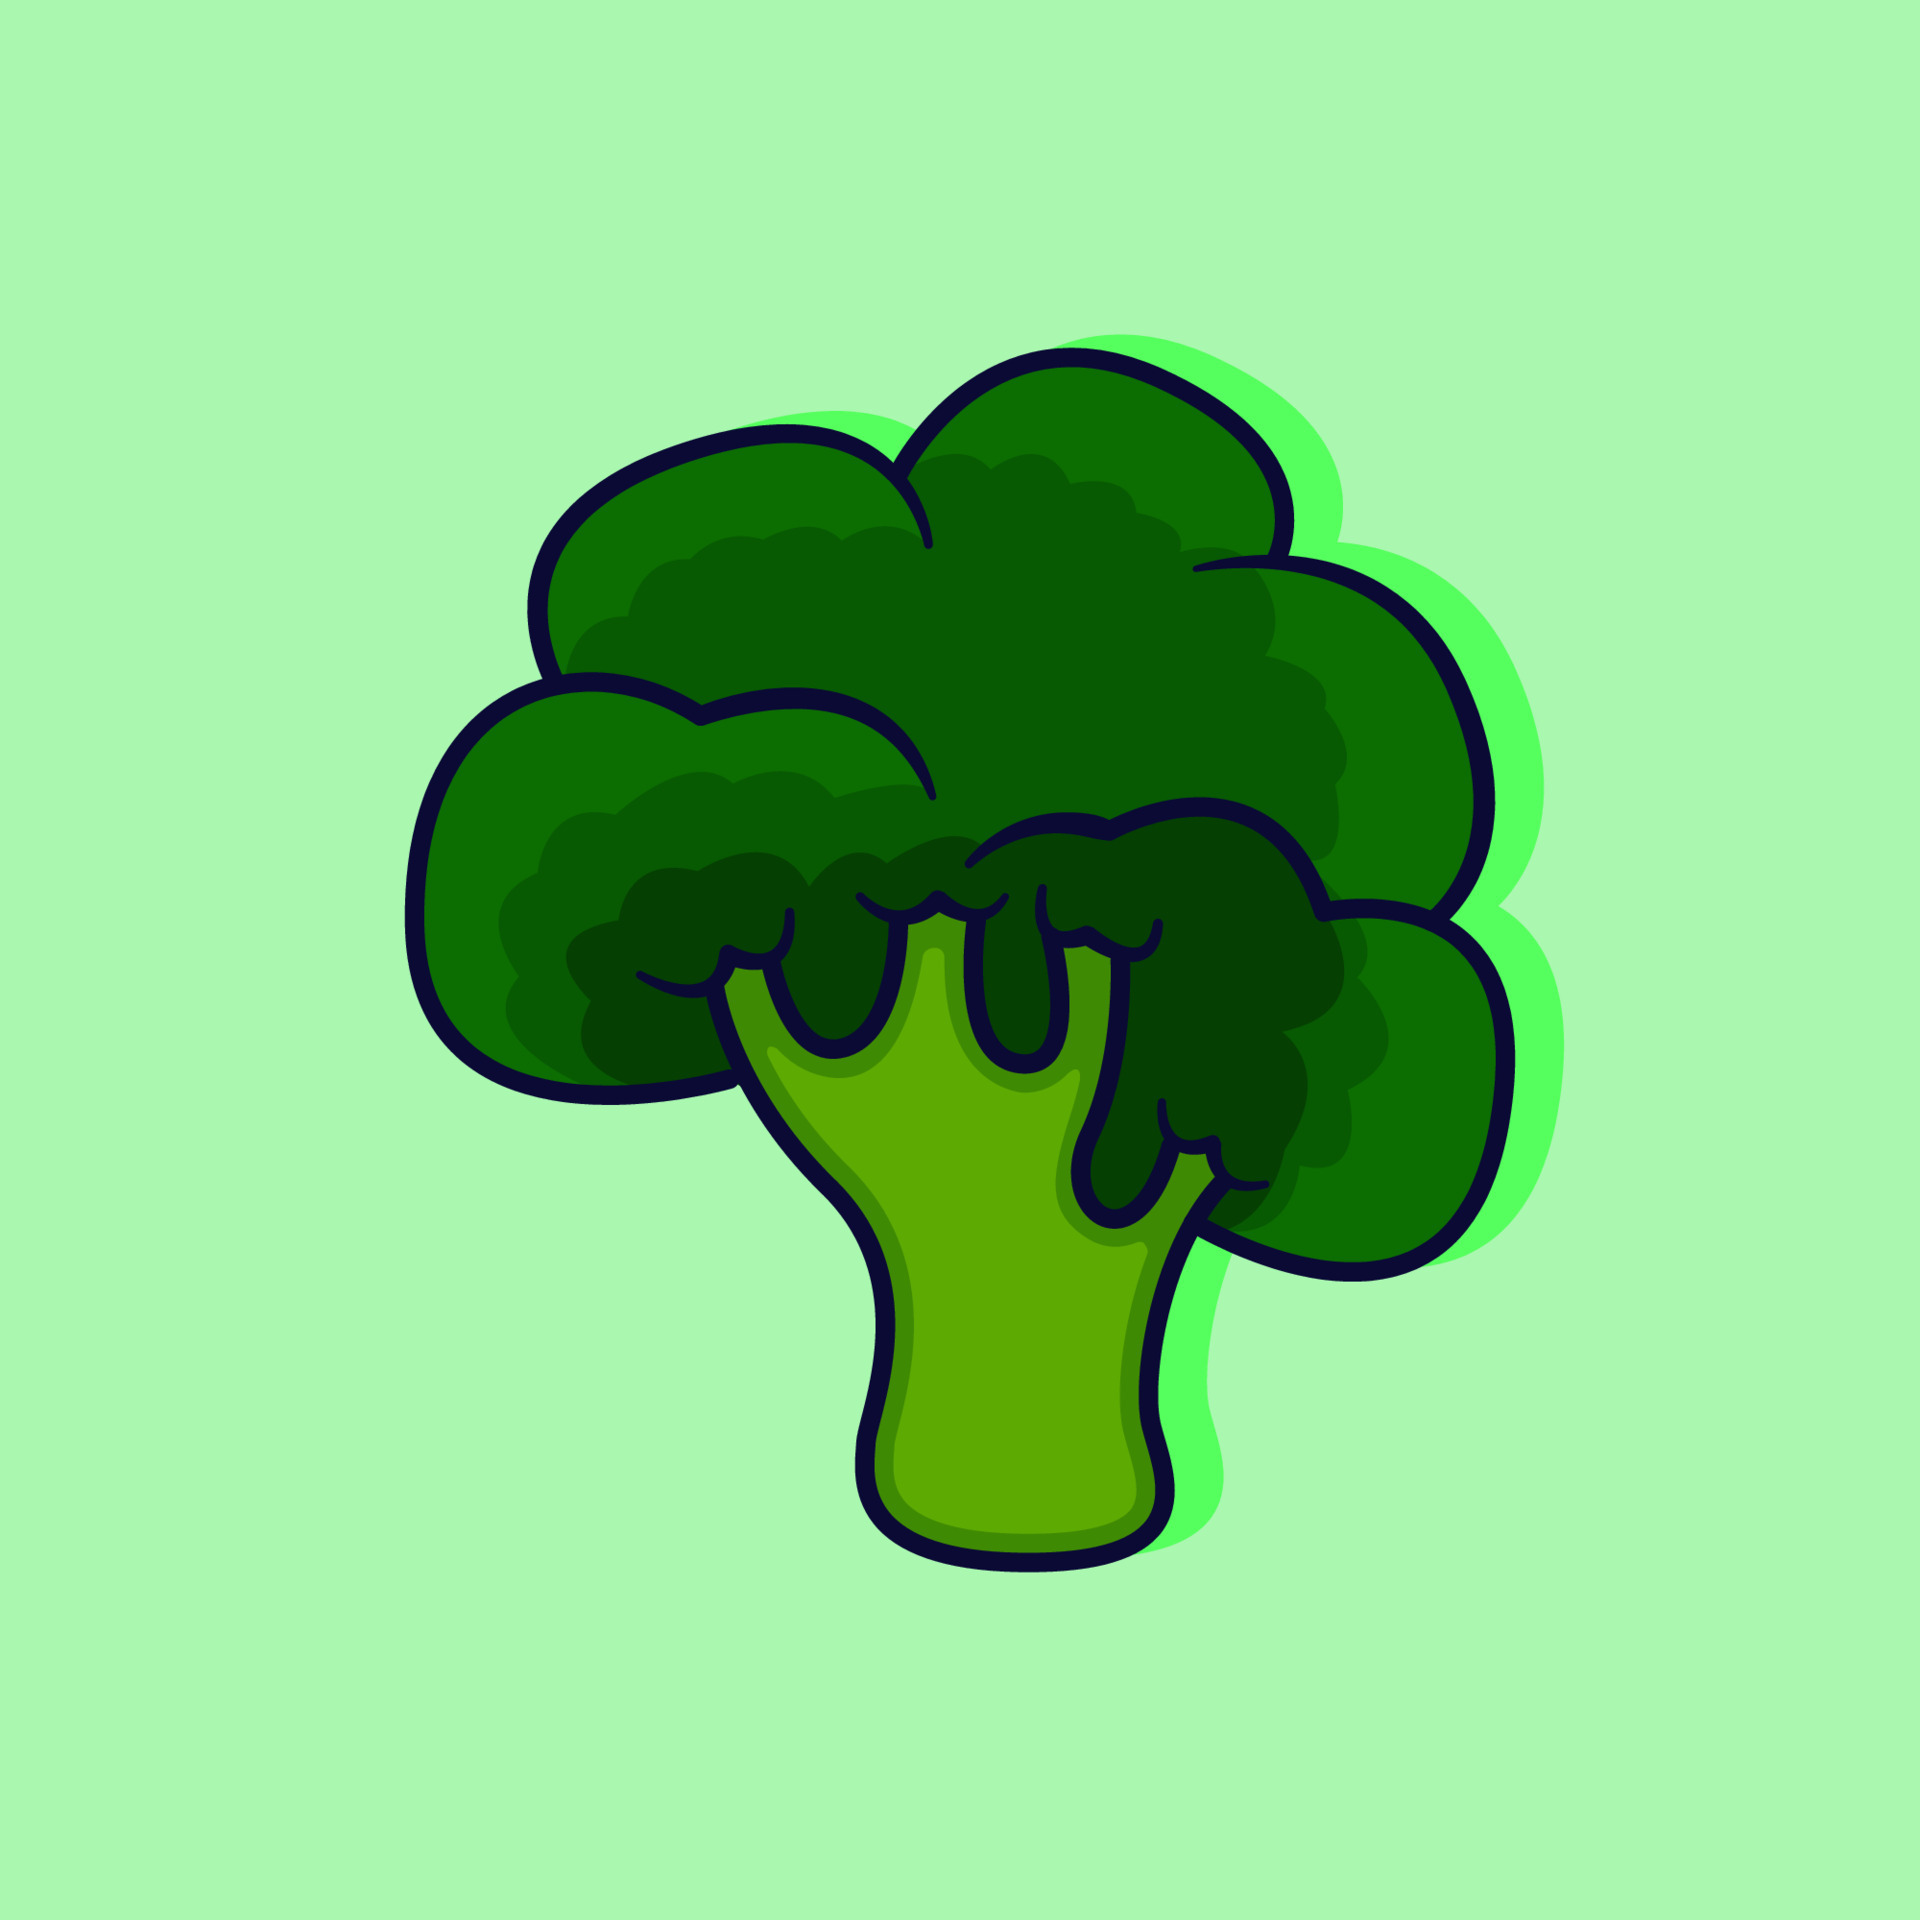 Broccoli cartoon vector art illustration 7486319 Vector Art at Vecteezy